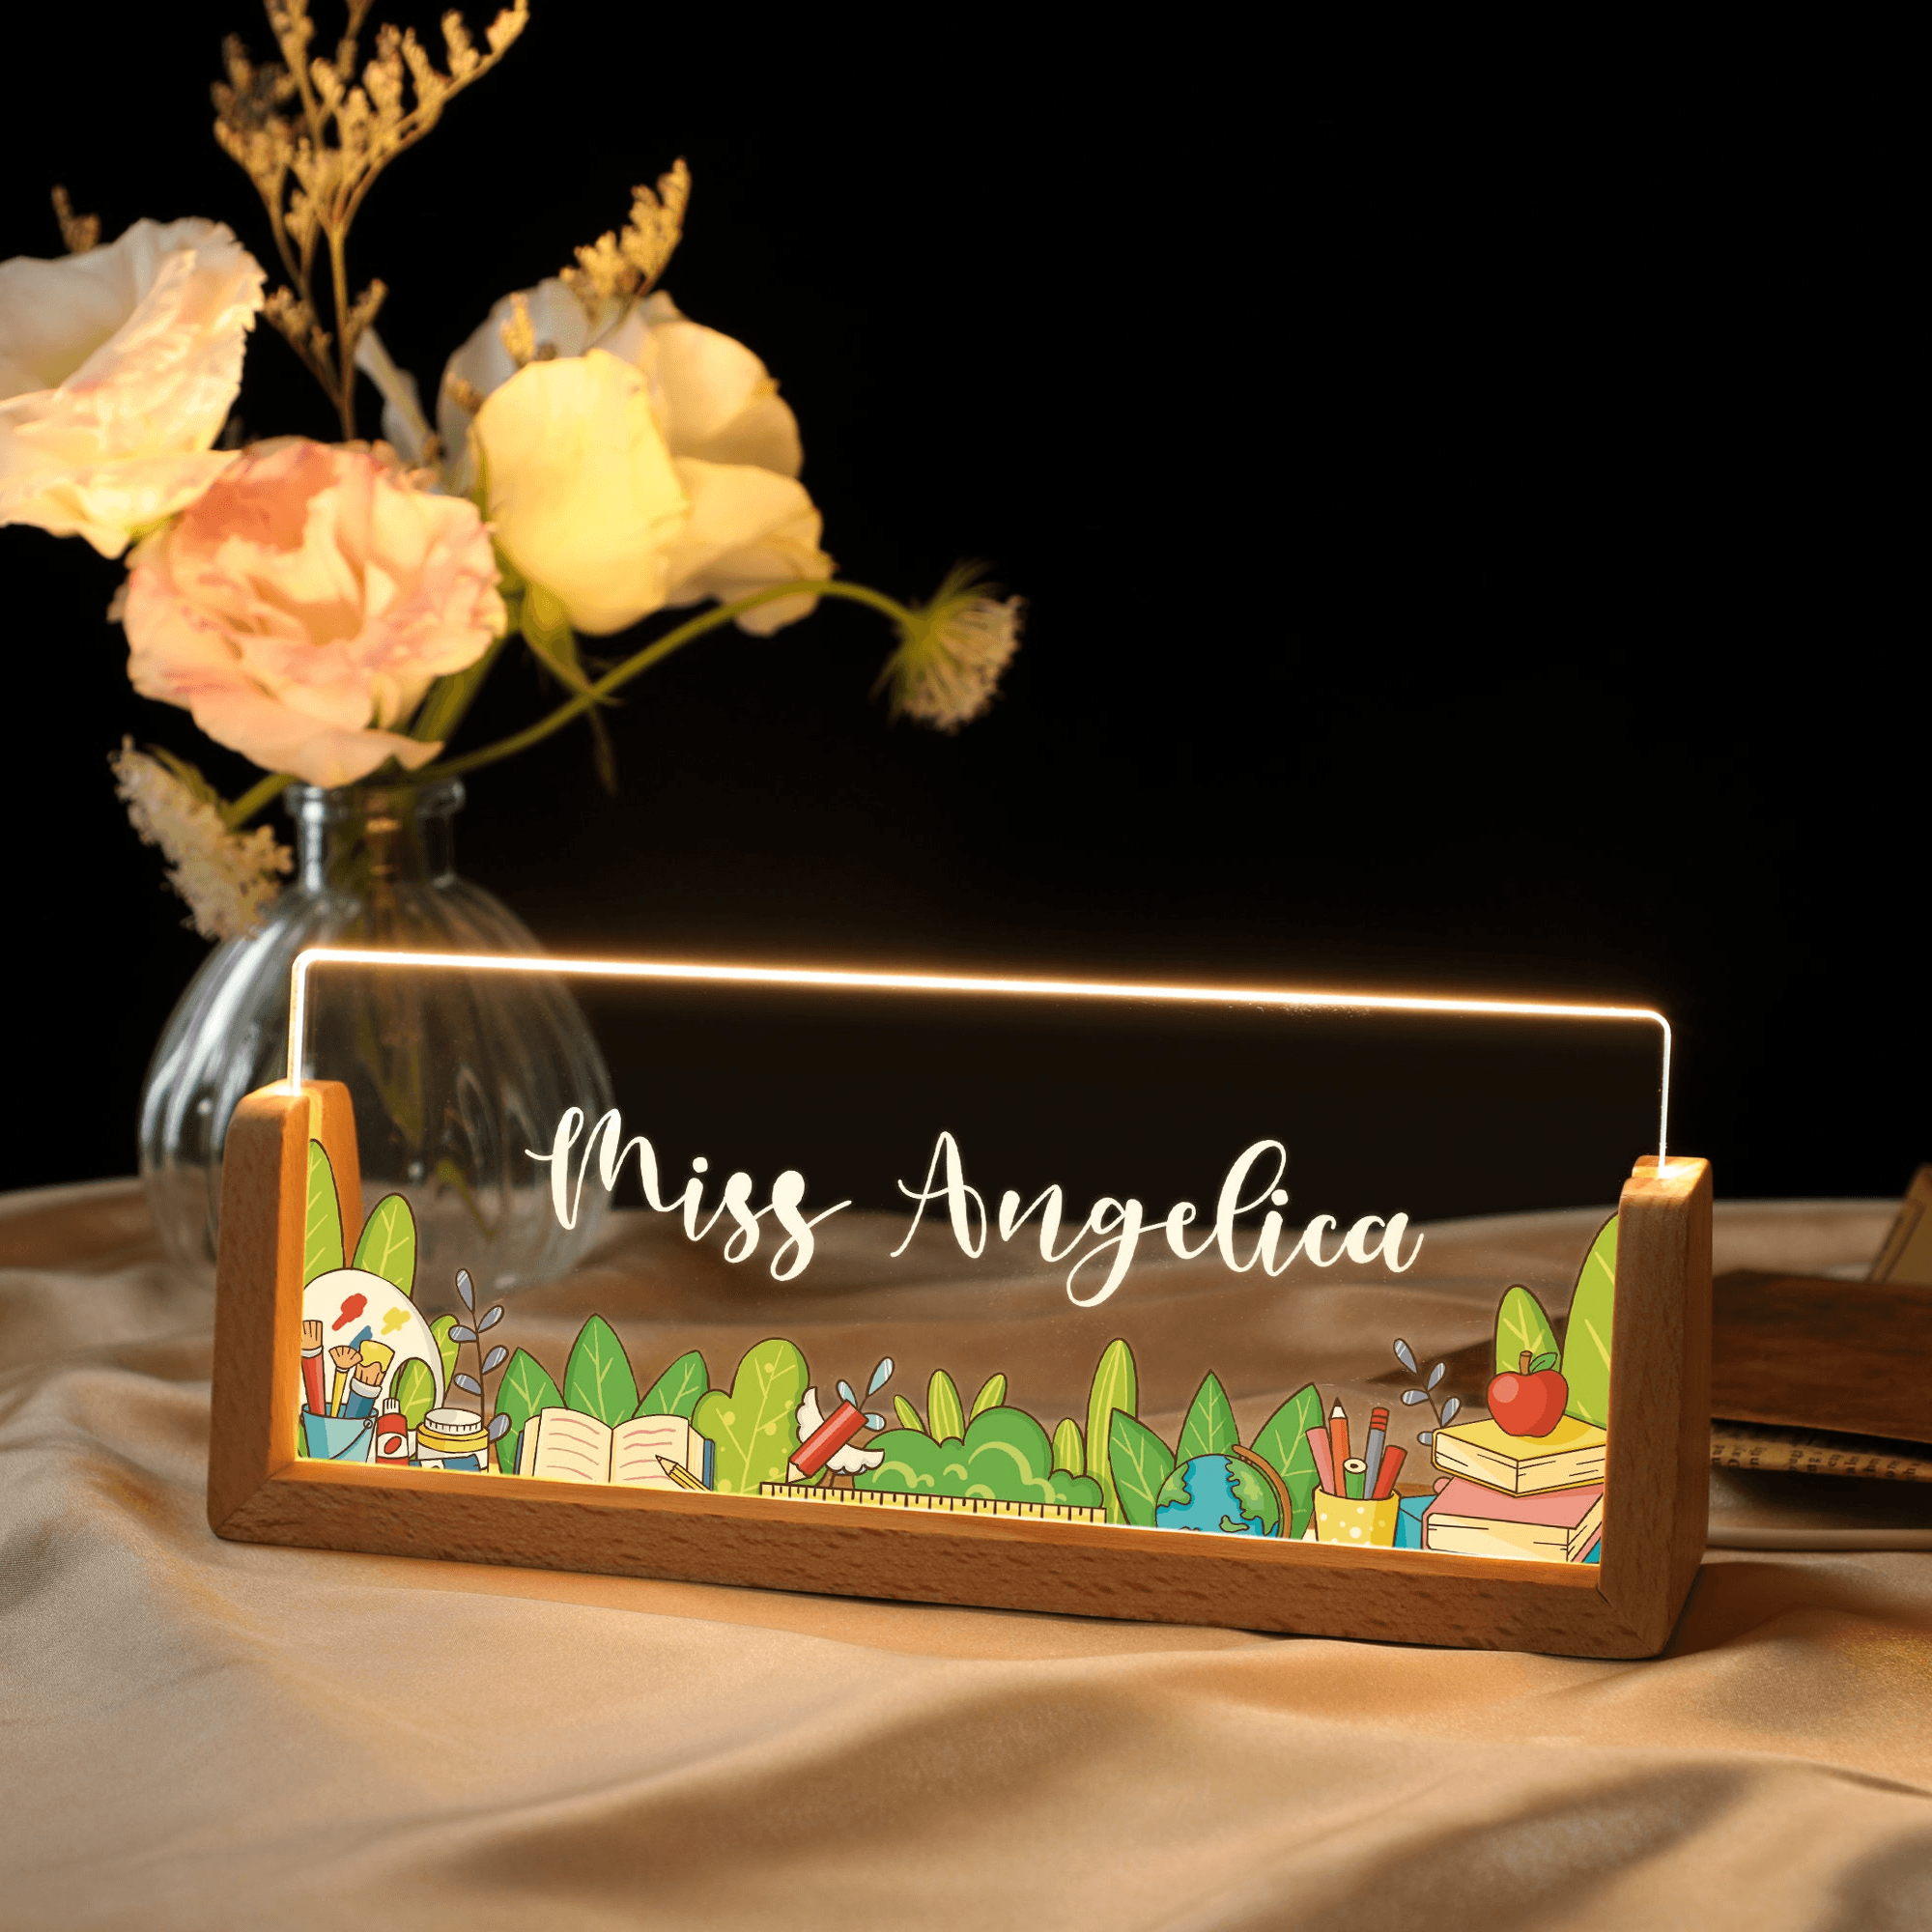 Name Desk Plate For Teacher - Personalized Acrylic Led Light With Wooden Base - Custom Gift For Teachers & Educators